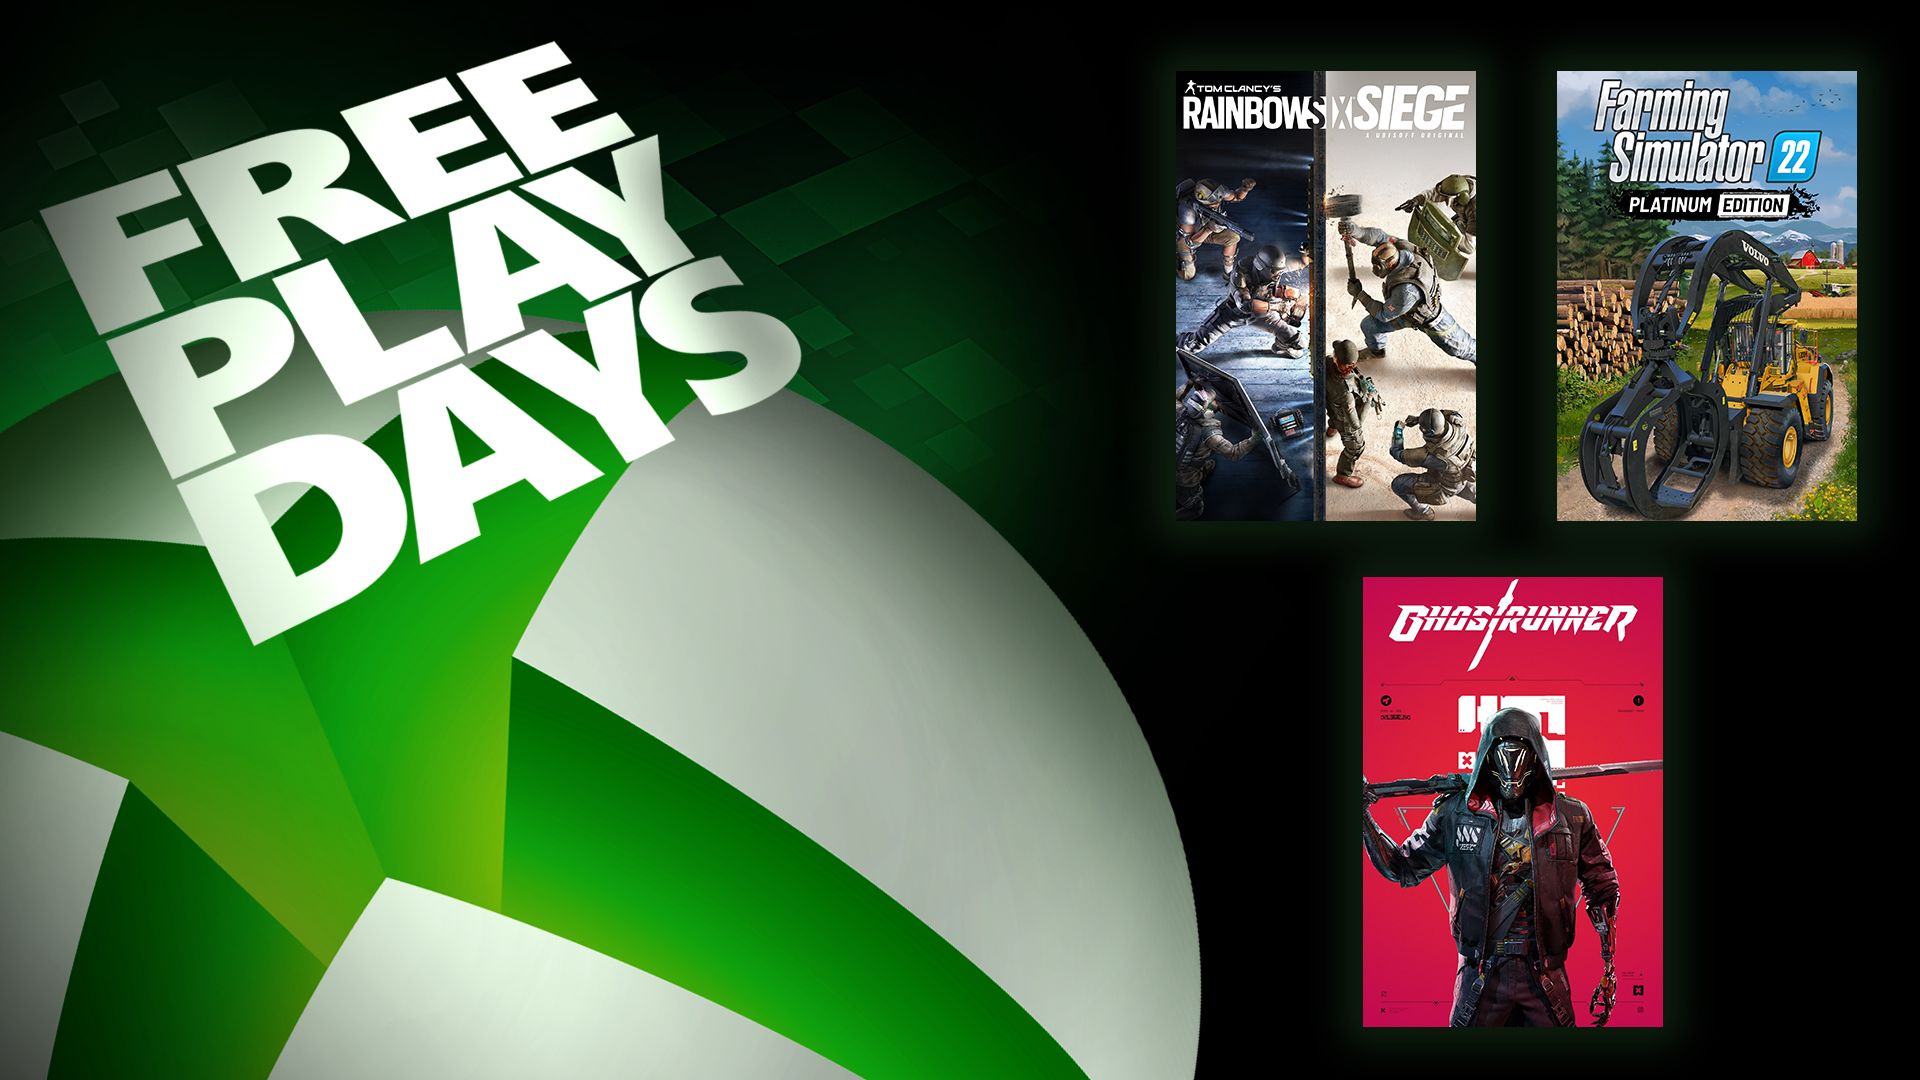 Free Play Days – Tom Clancy’s Rainbow Six Siege, Farming Simulator 22: Platinum Edition, and Ghostrunner